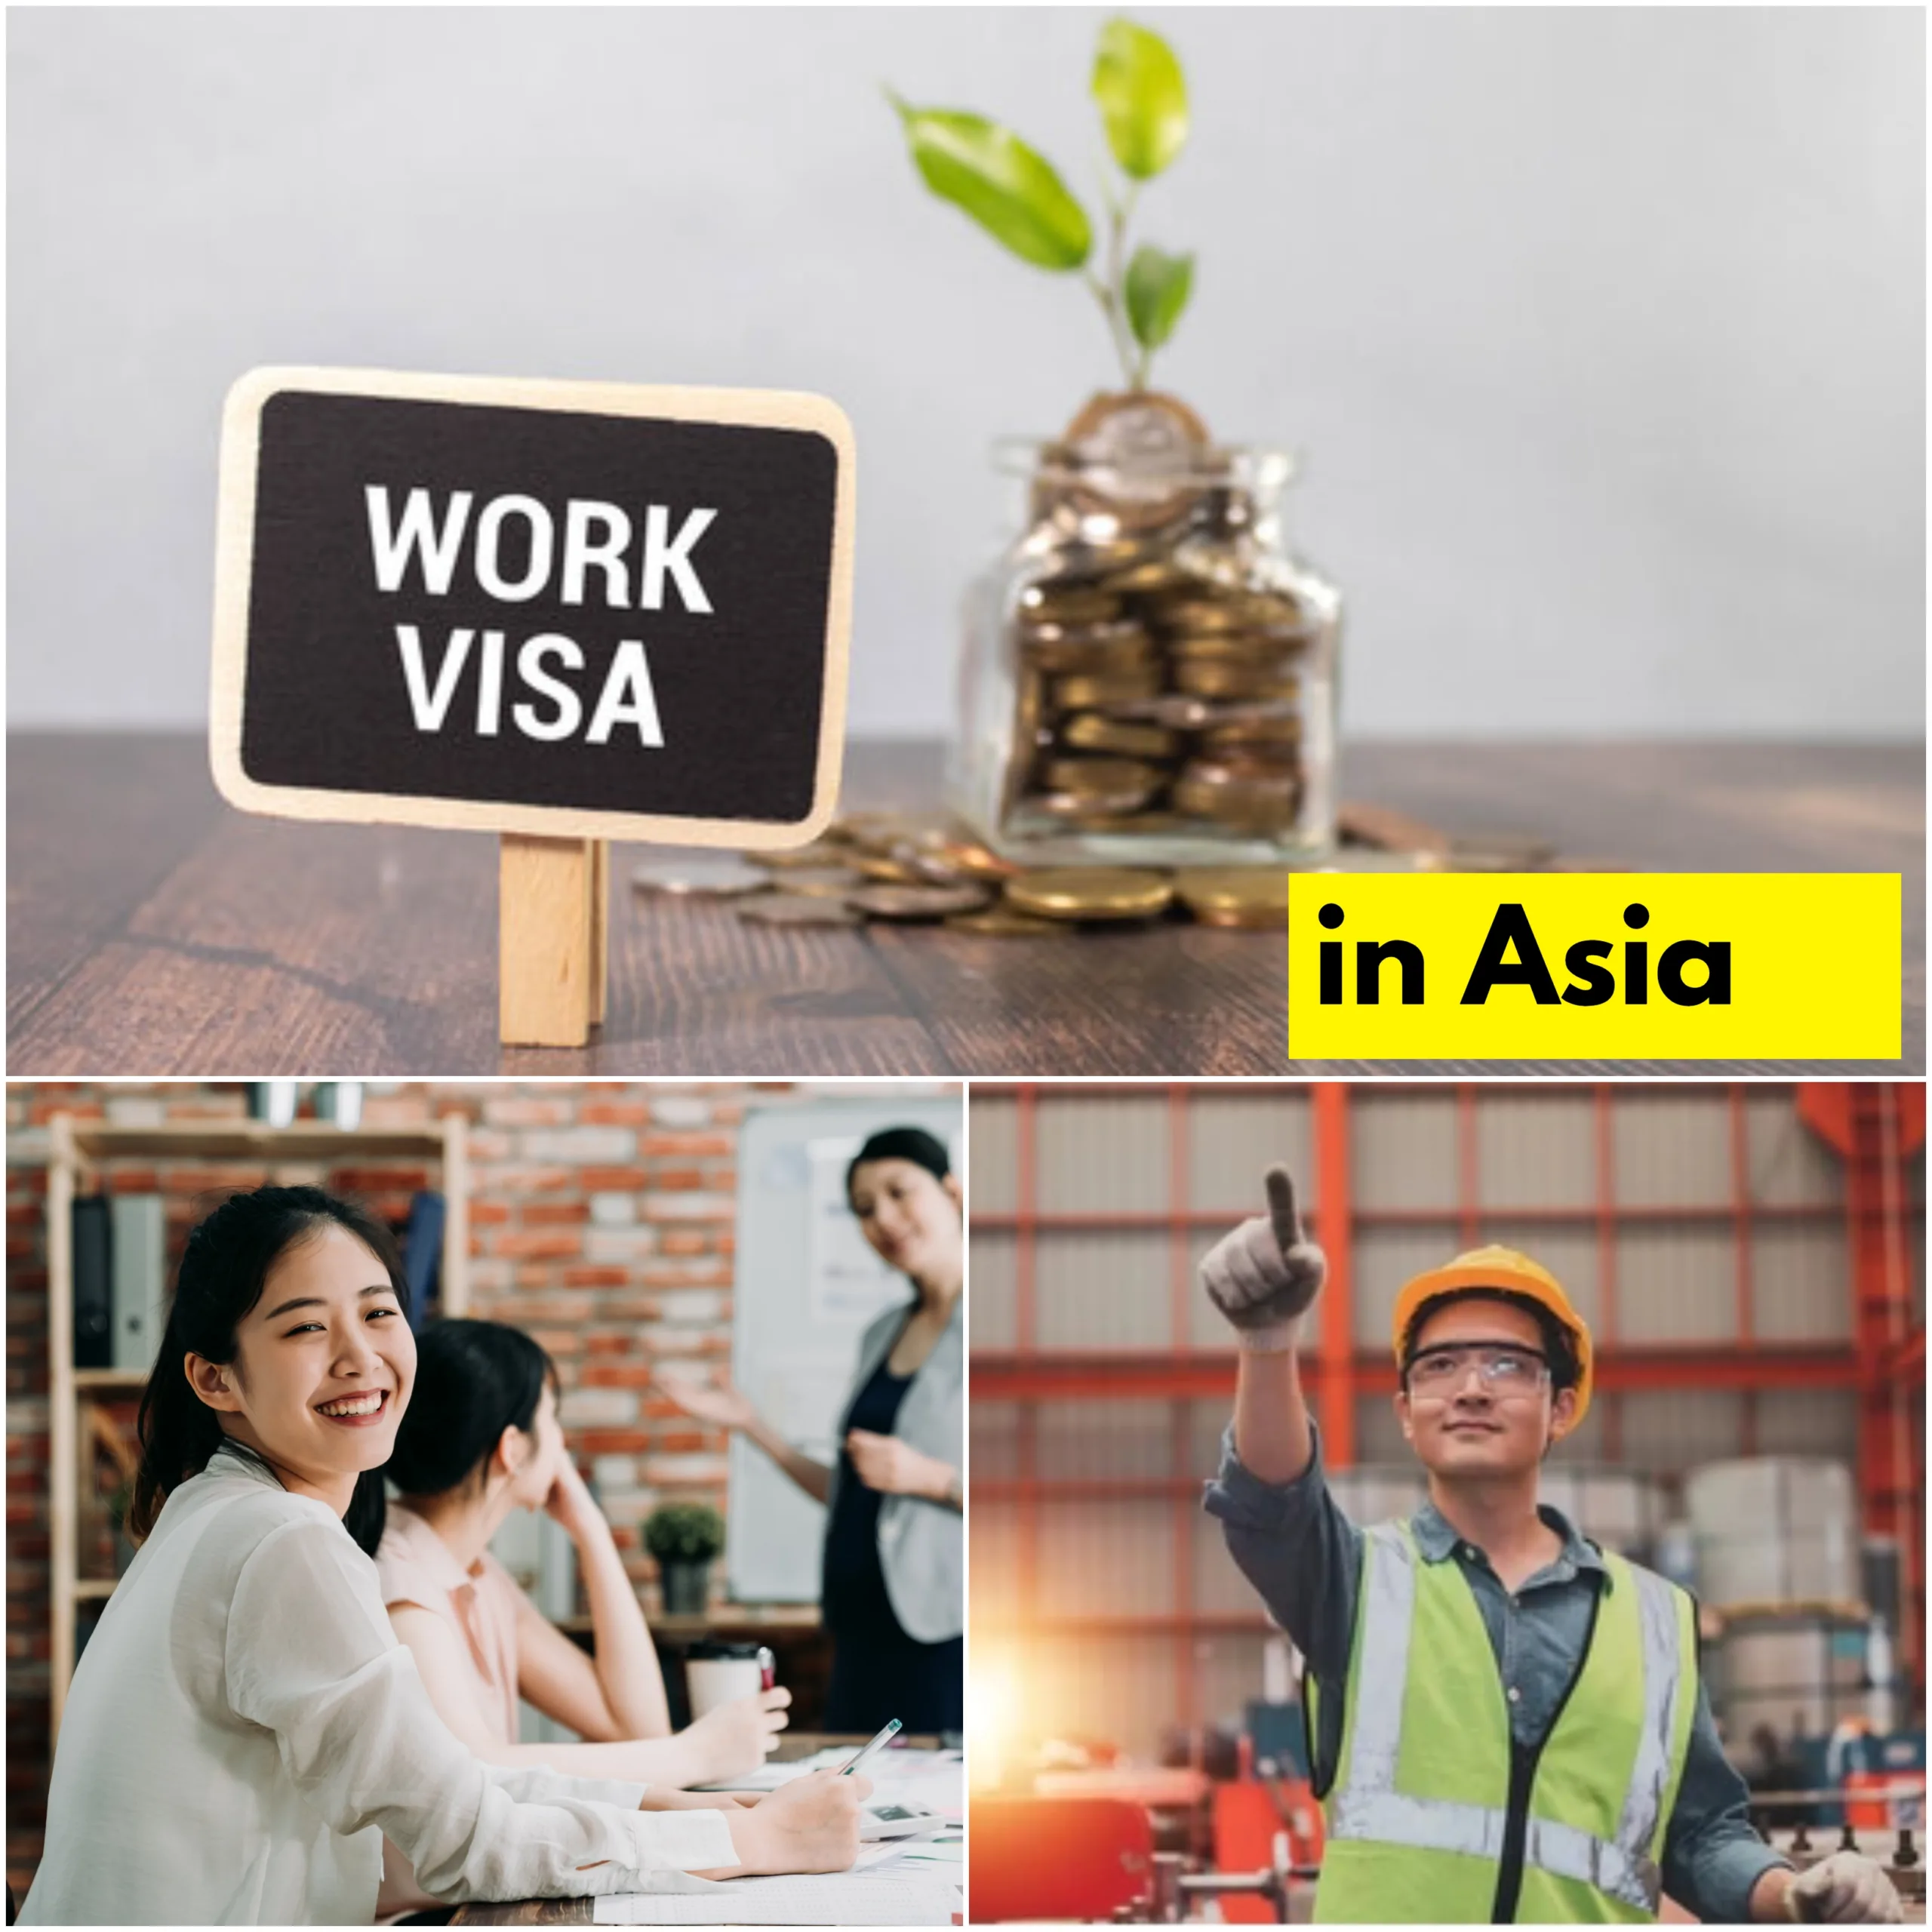 Work visa in Asia